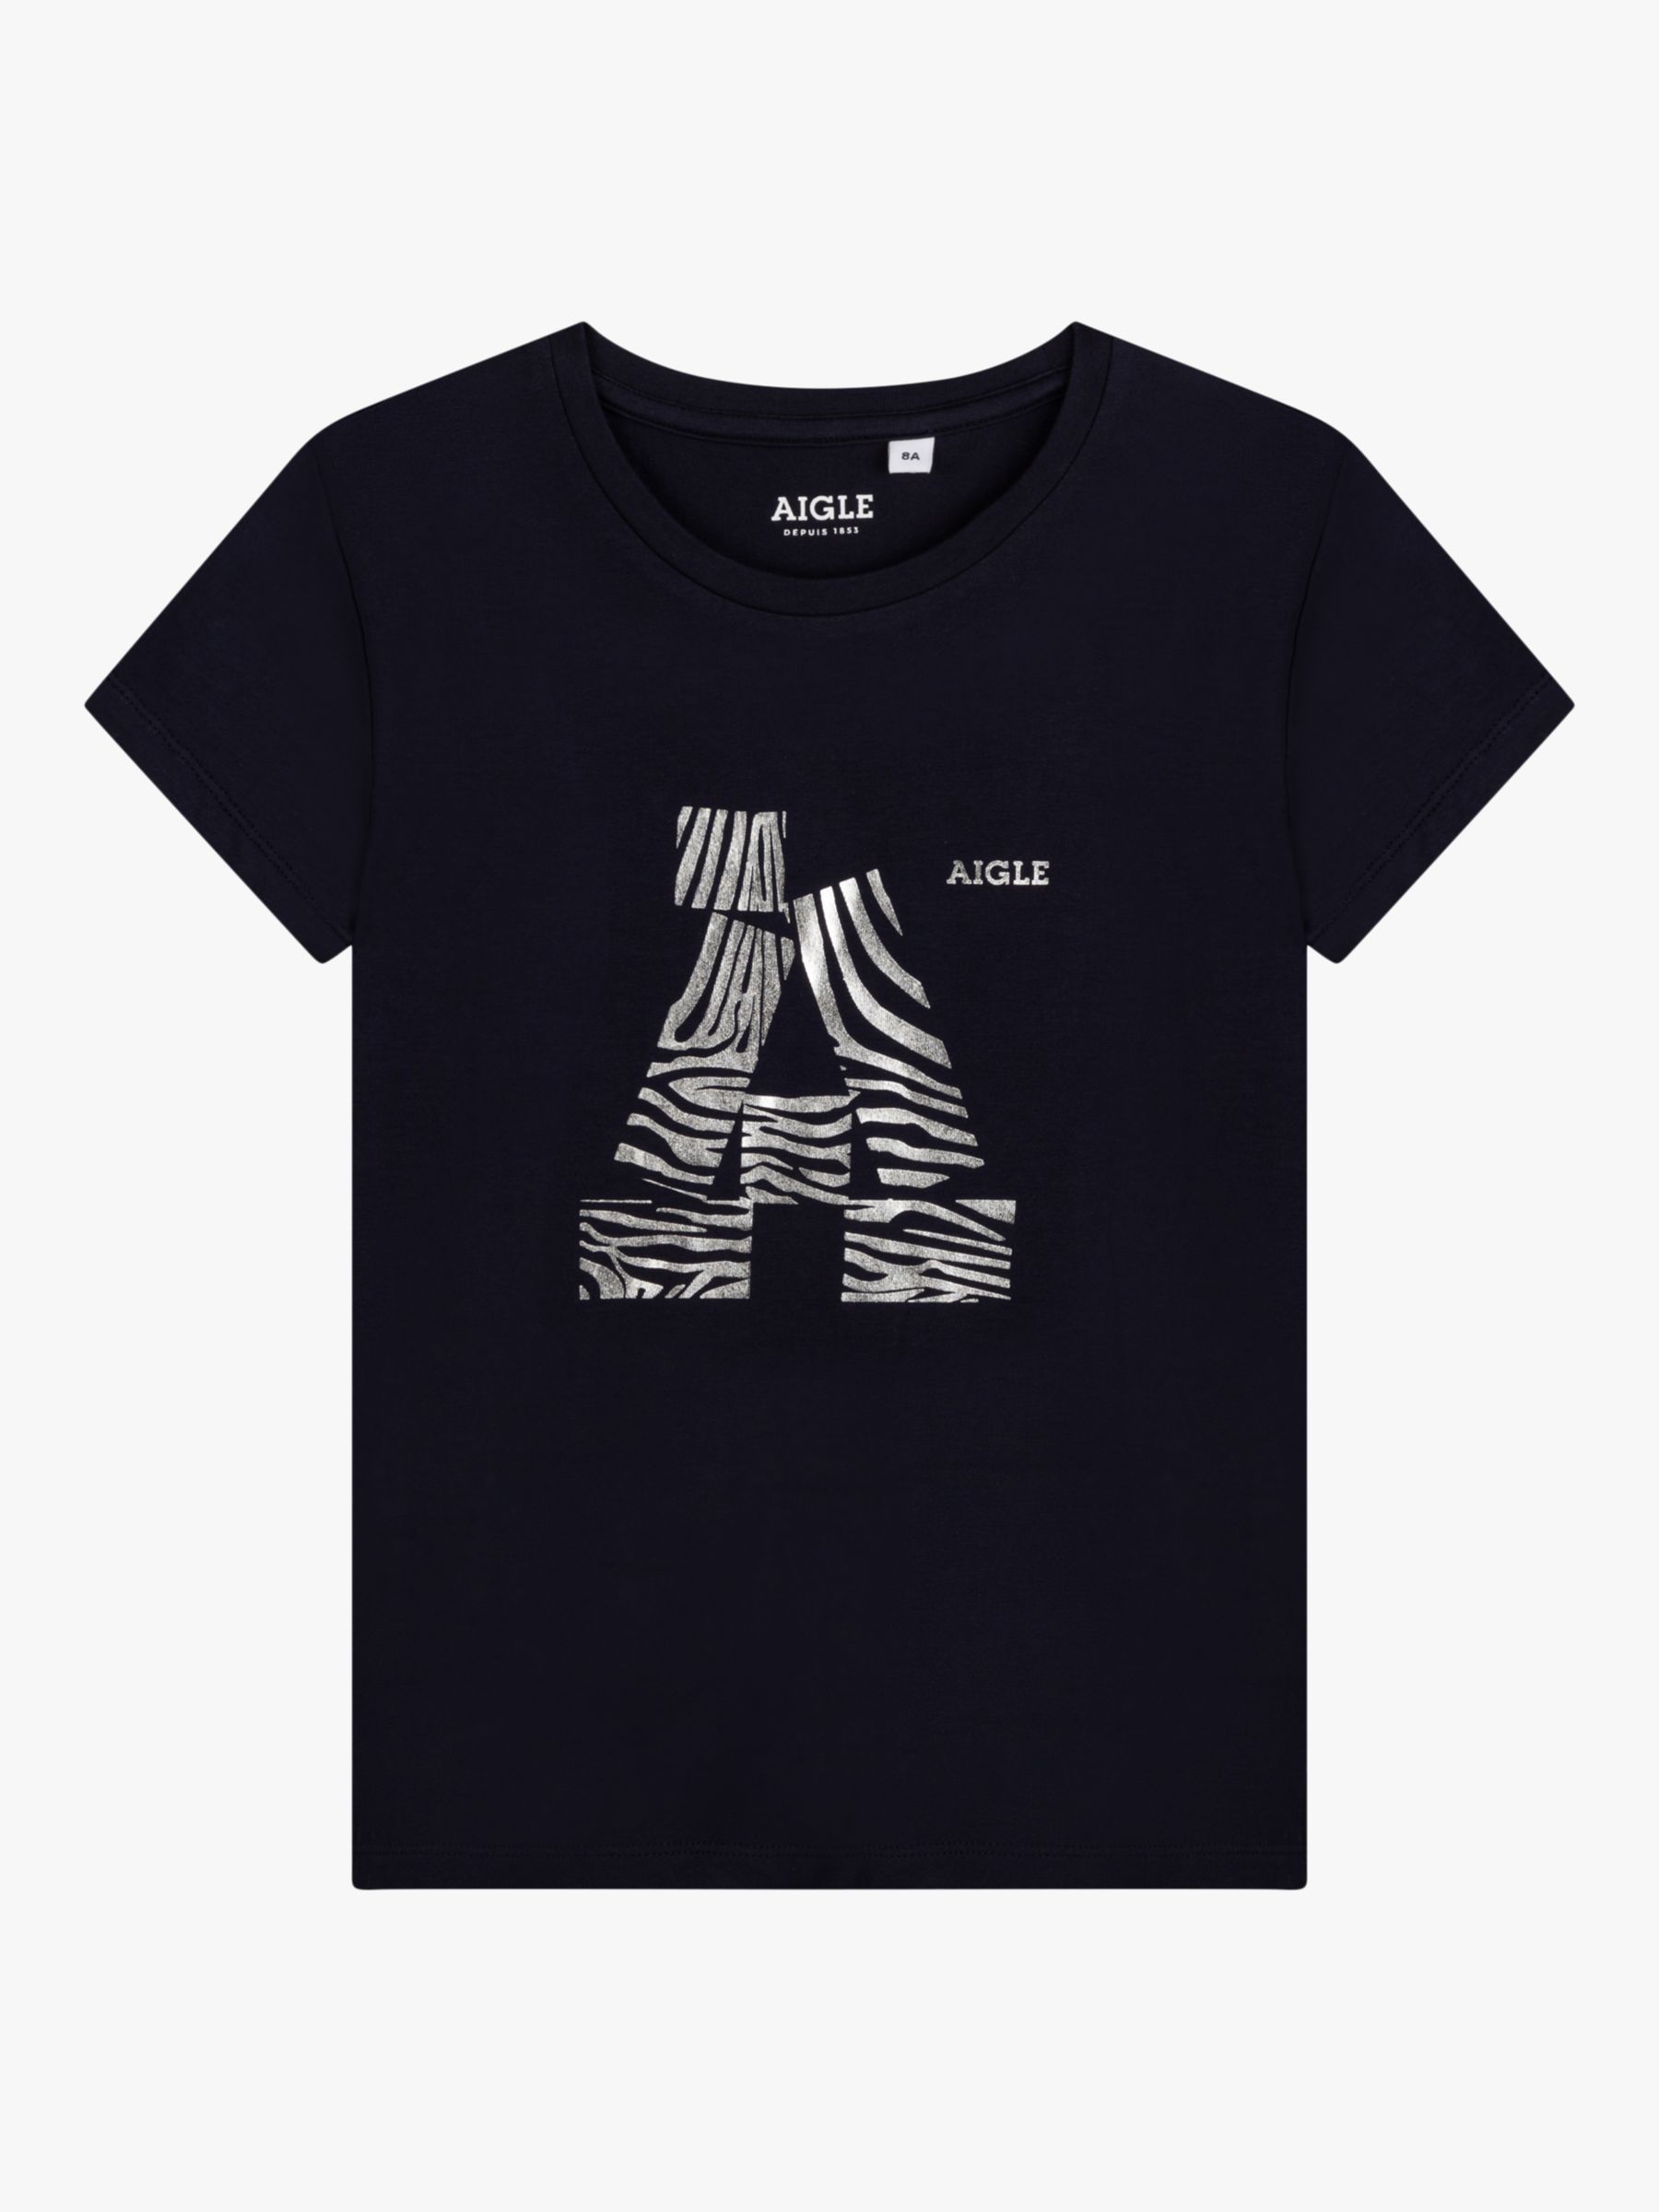 Aigle Kids' Logo Print T-Shirt, Dark Blue, 4 years